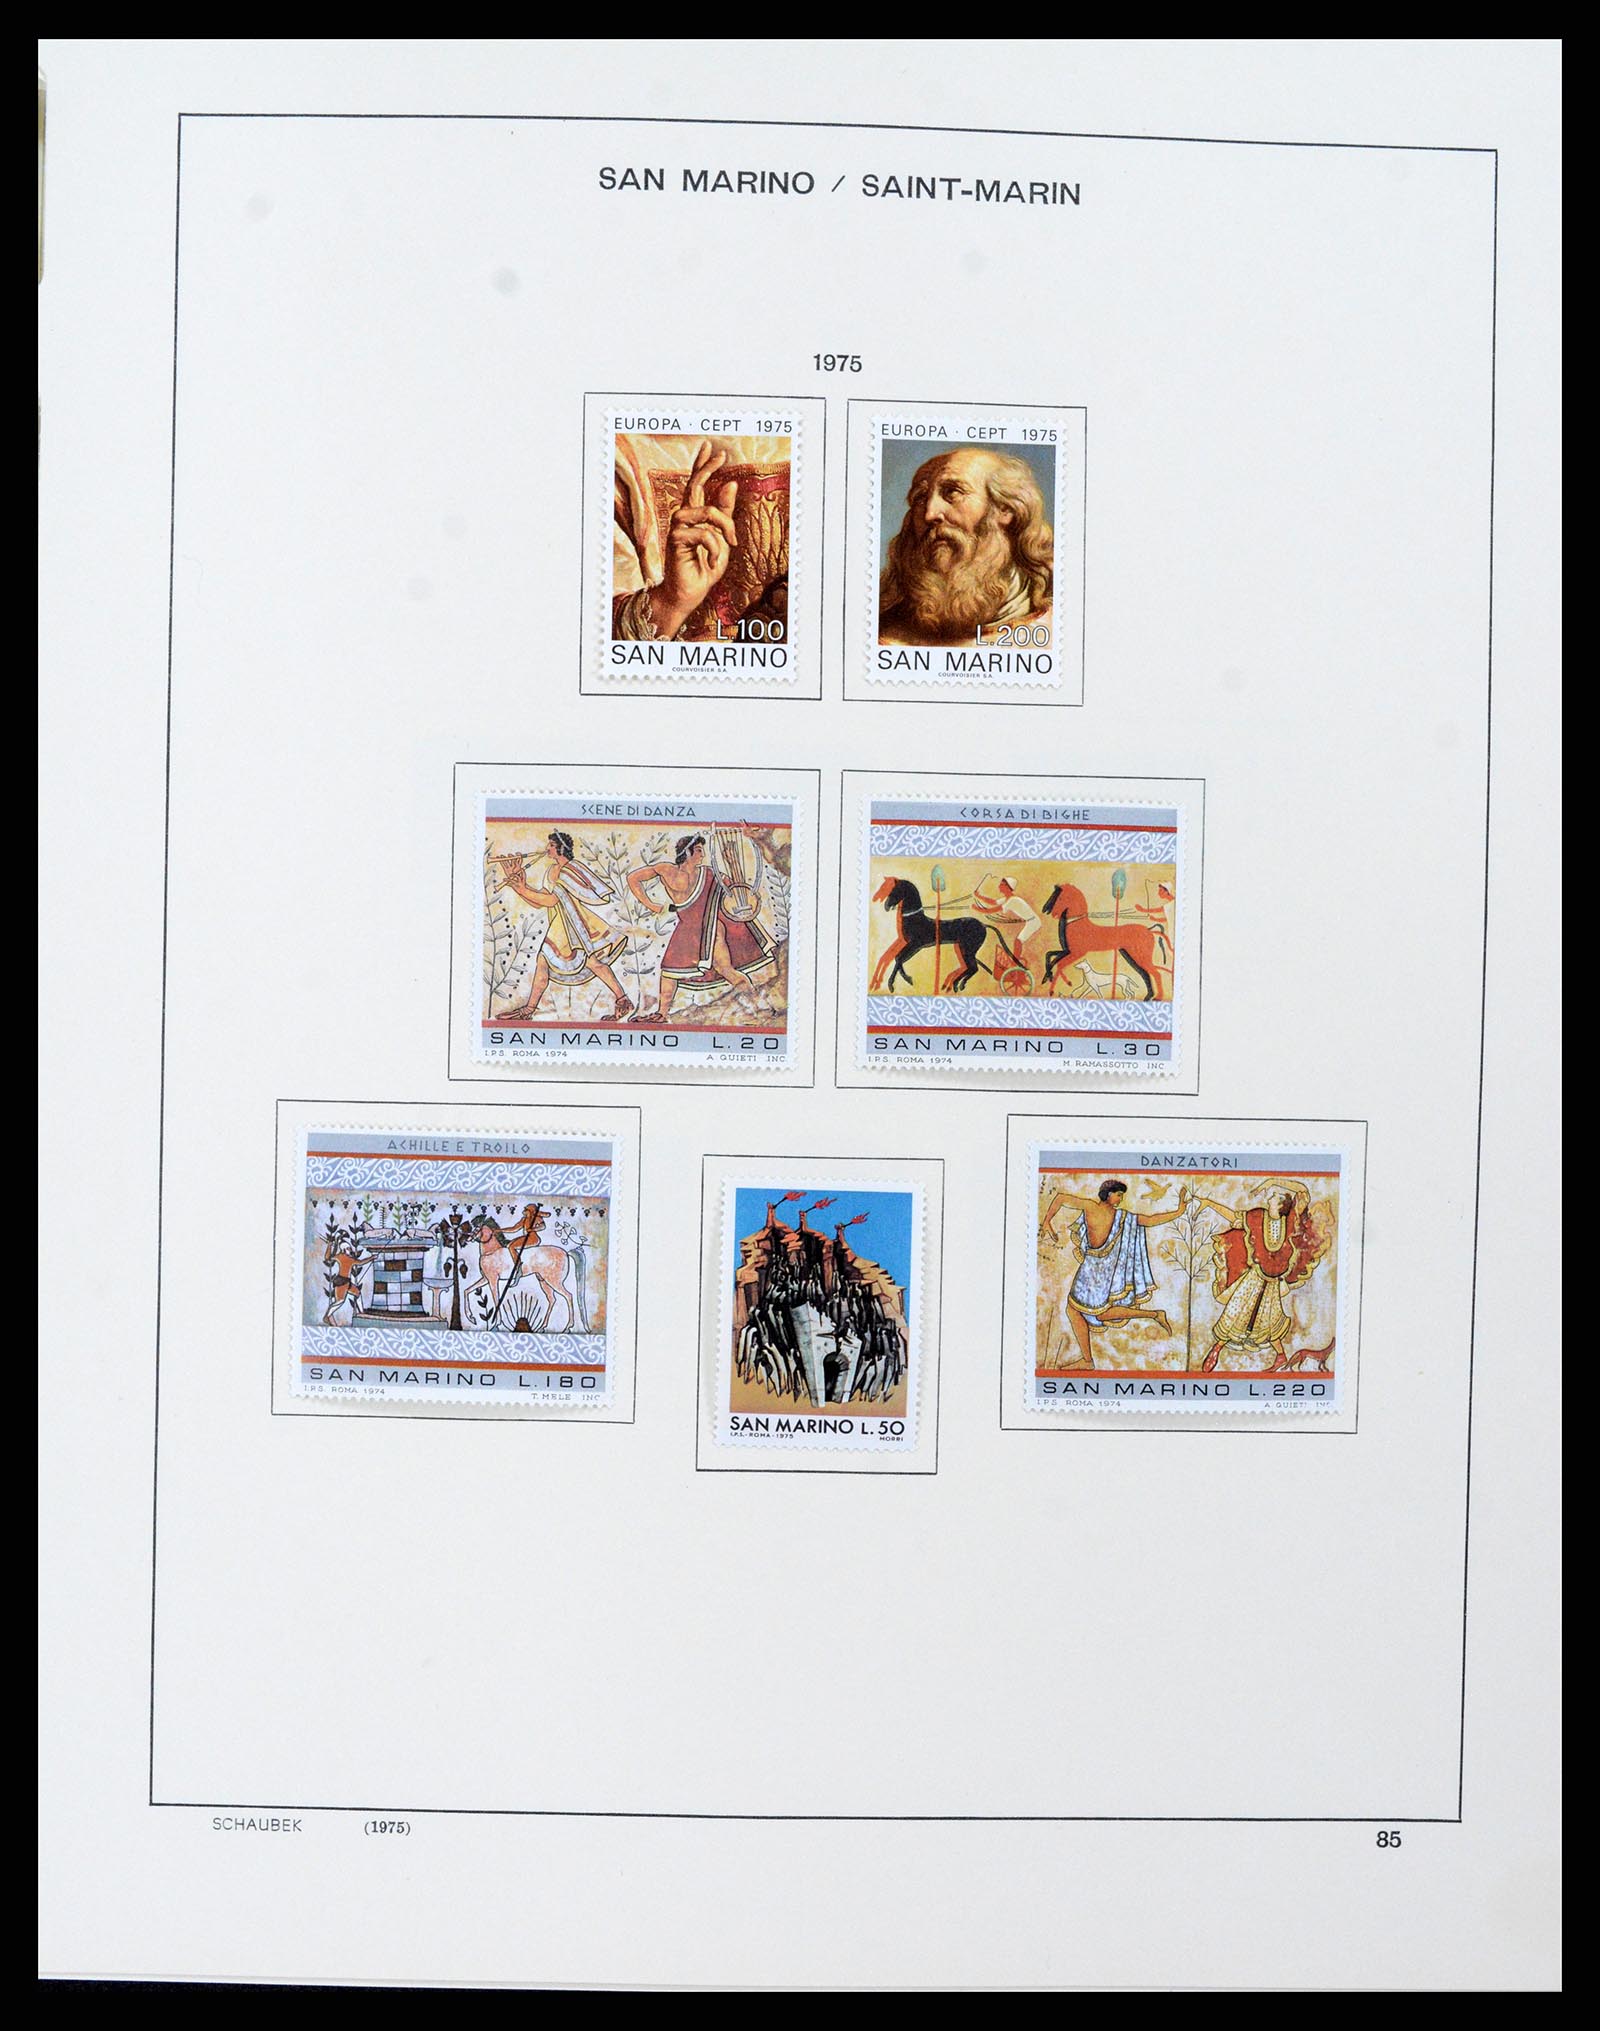 37556 088 - Stamp collection 37556 San Marino 1877-2017.